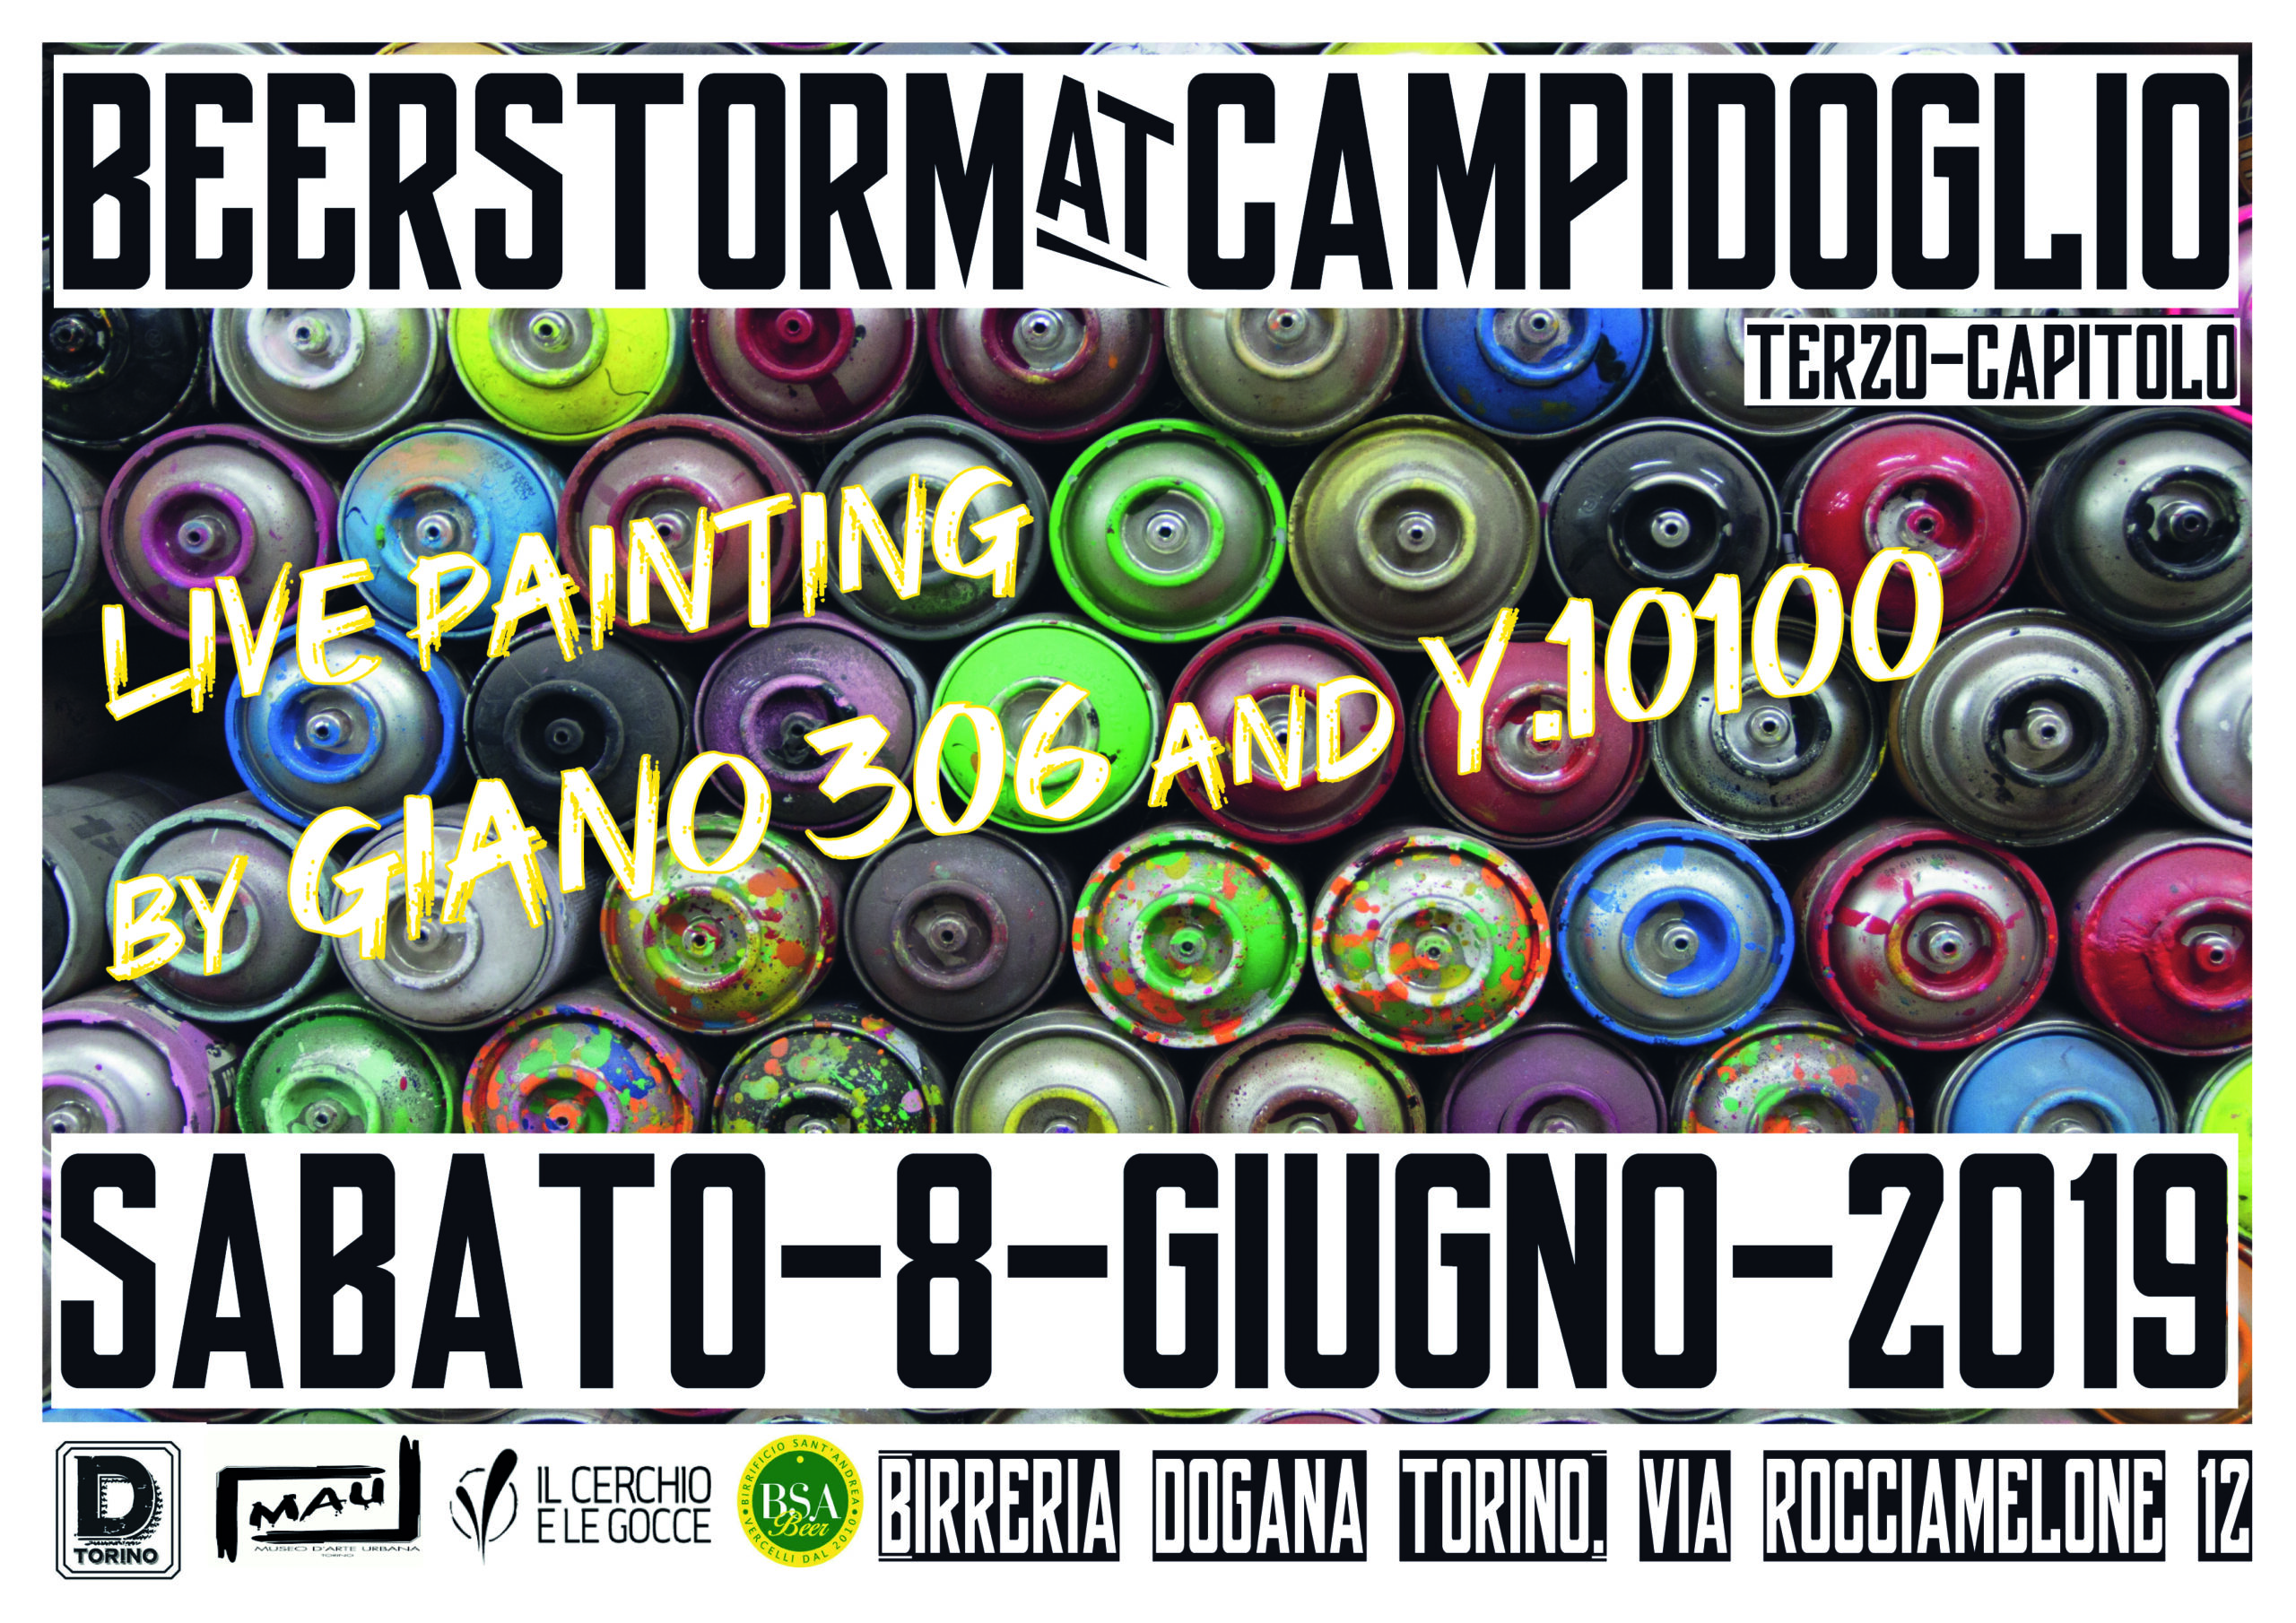 Featured image for “Beerstorm@Campidoglio”